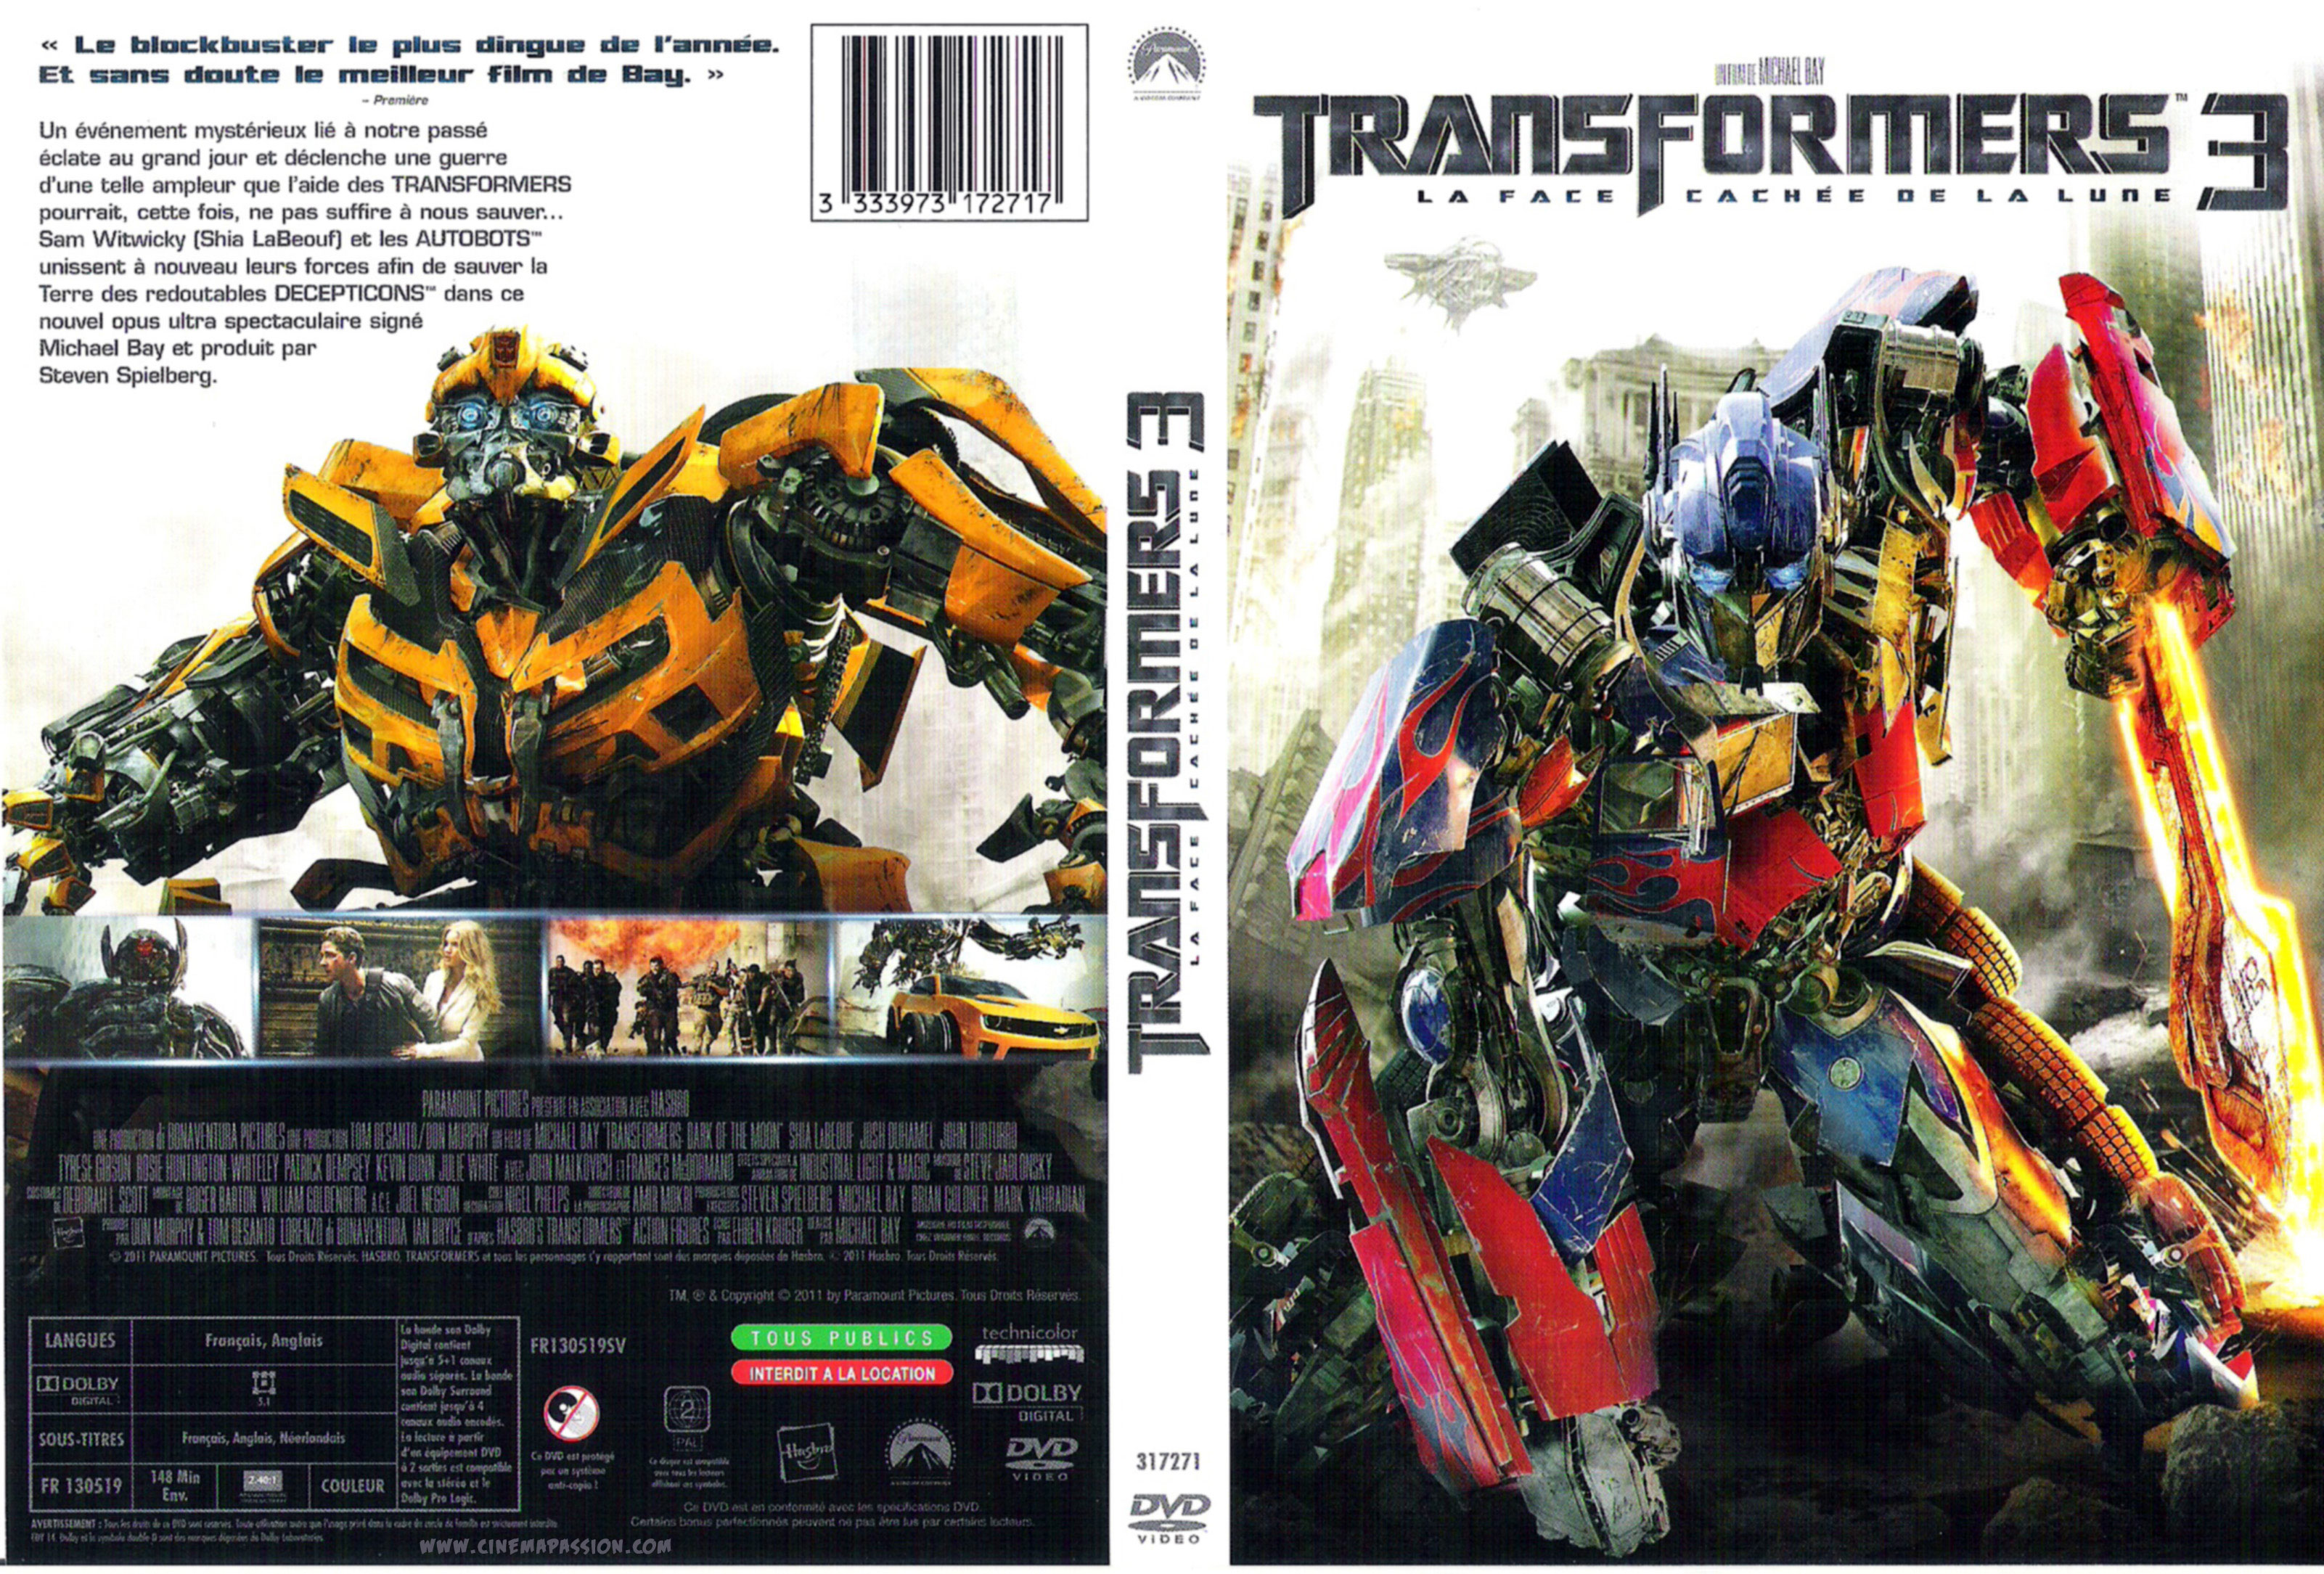 Jaquette DVD Transformers 3